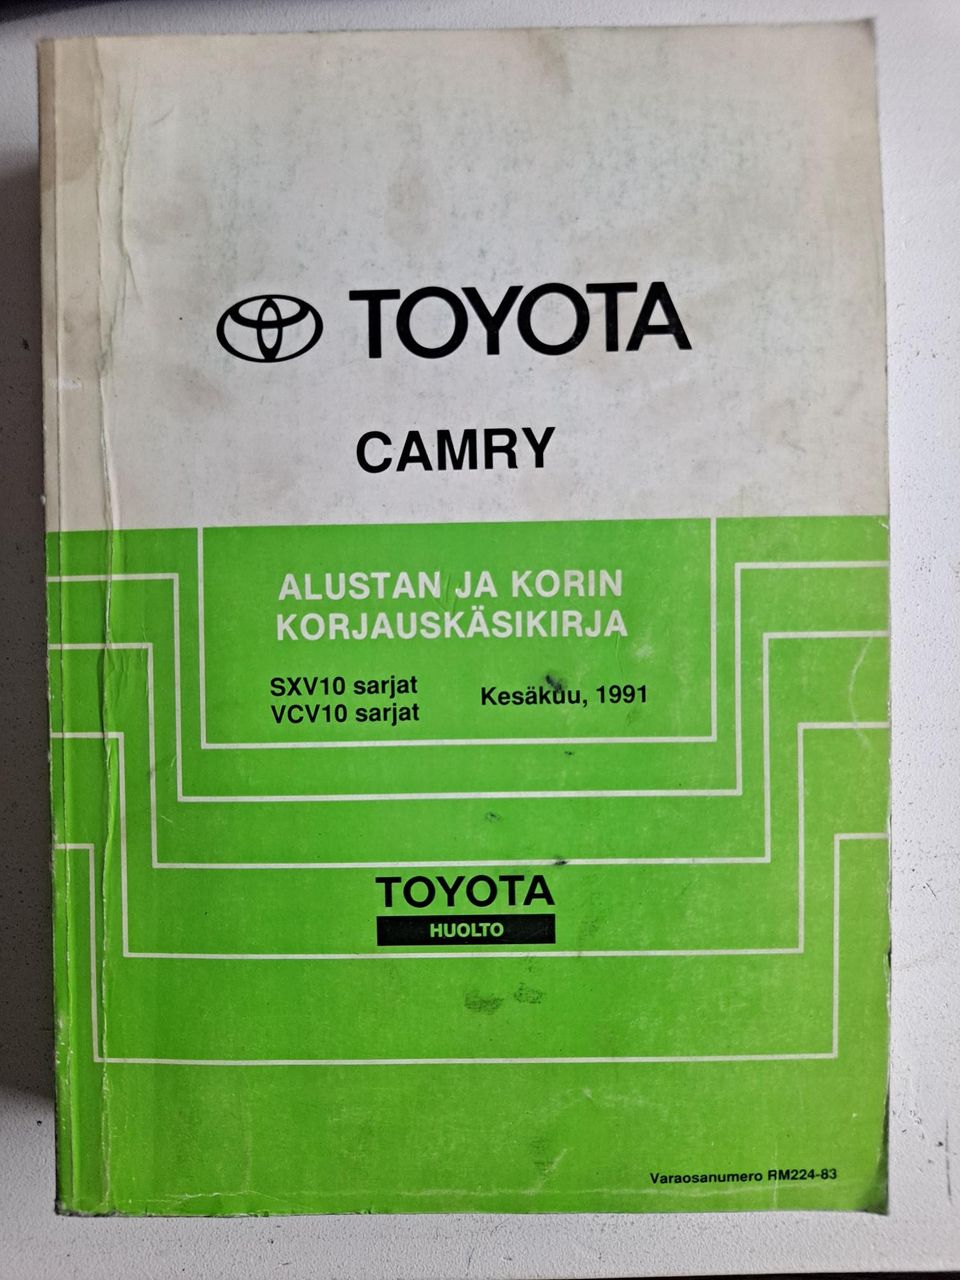 Toyota Camry opus